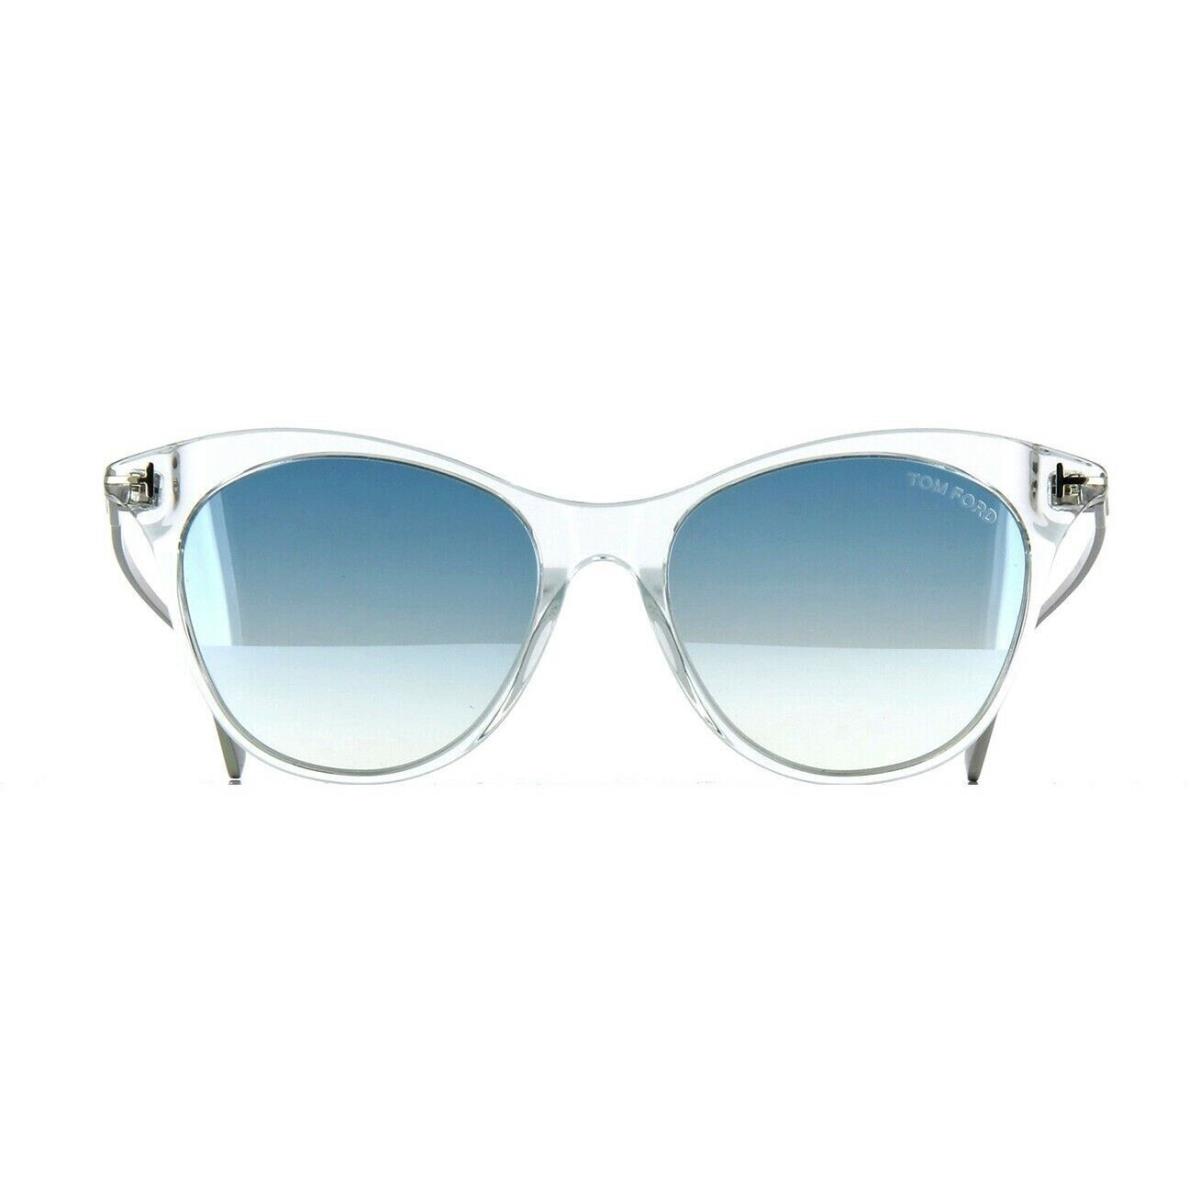 Tom Ford sunglasses  - Transparent Palladium Frame, Blue Silver Flash Lens